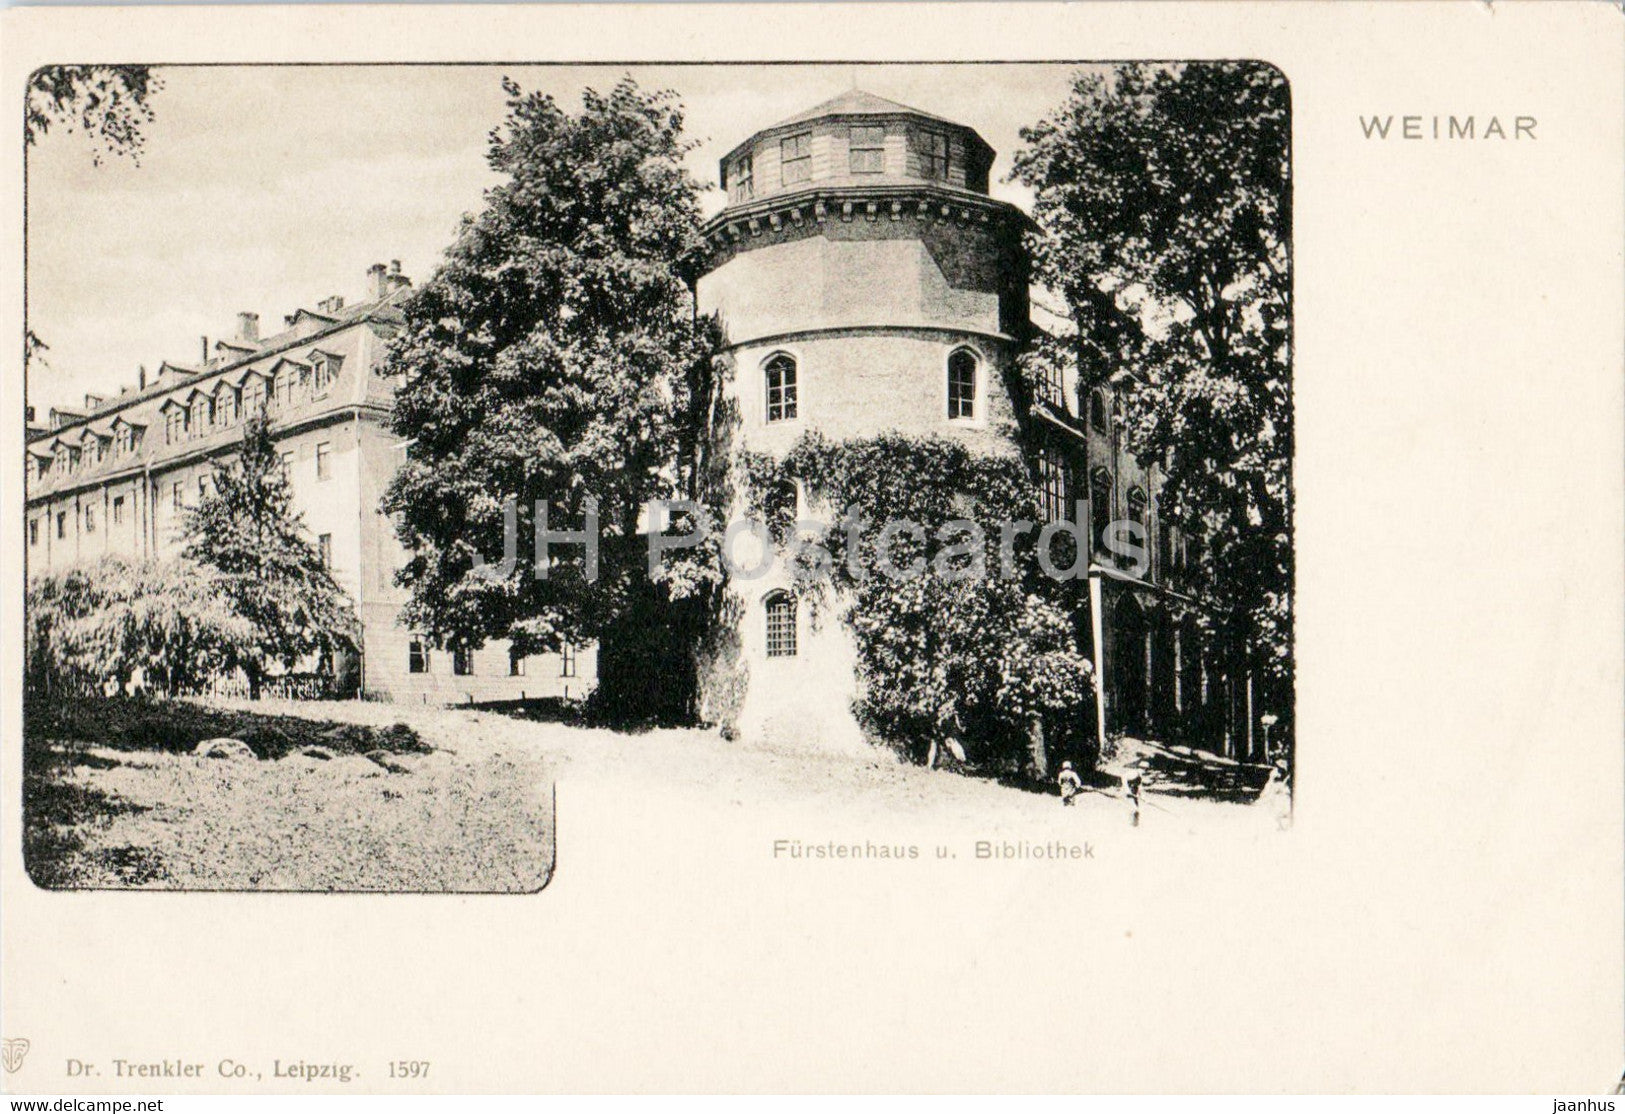 Weimar - Furstenhaus u Bibliothek - library - 1597 - old postcard - Germany - unused - JH Postcards